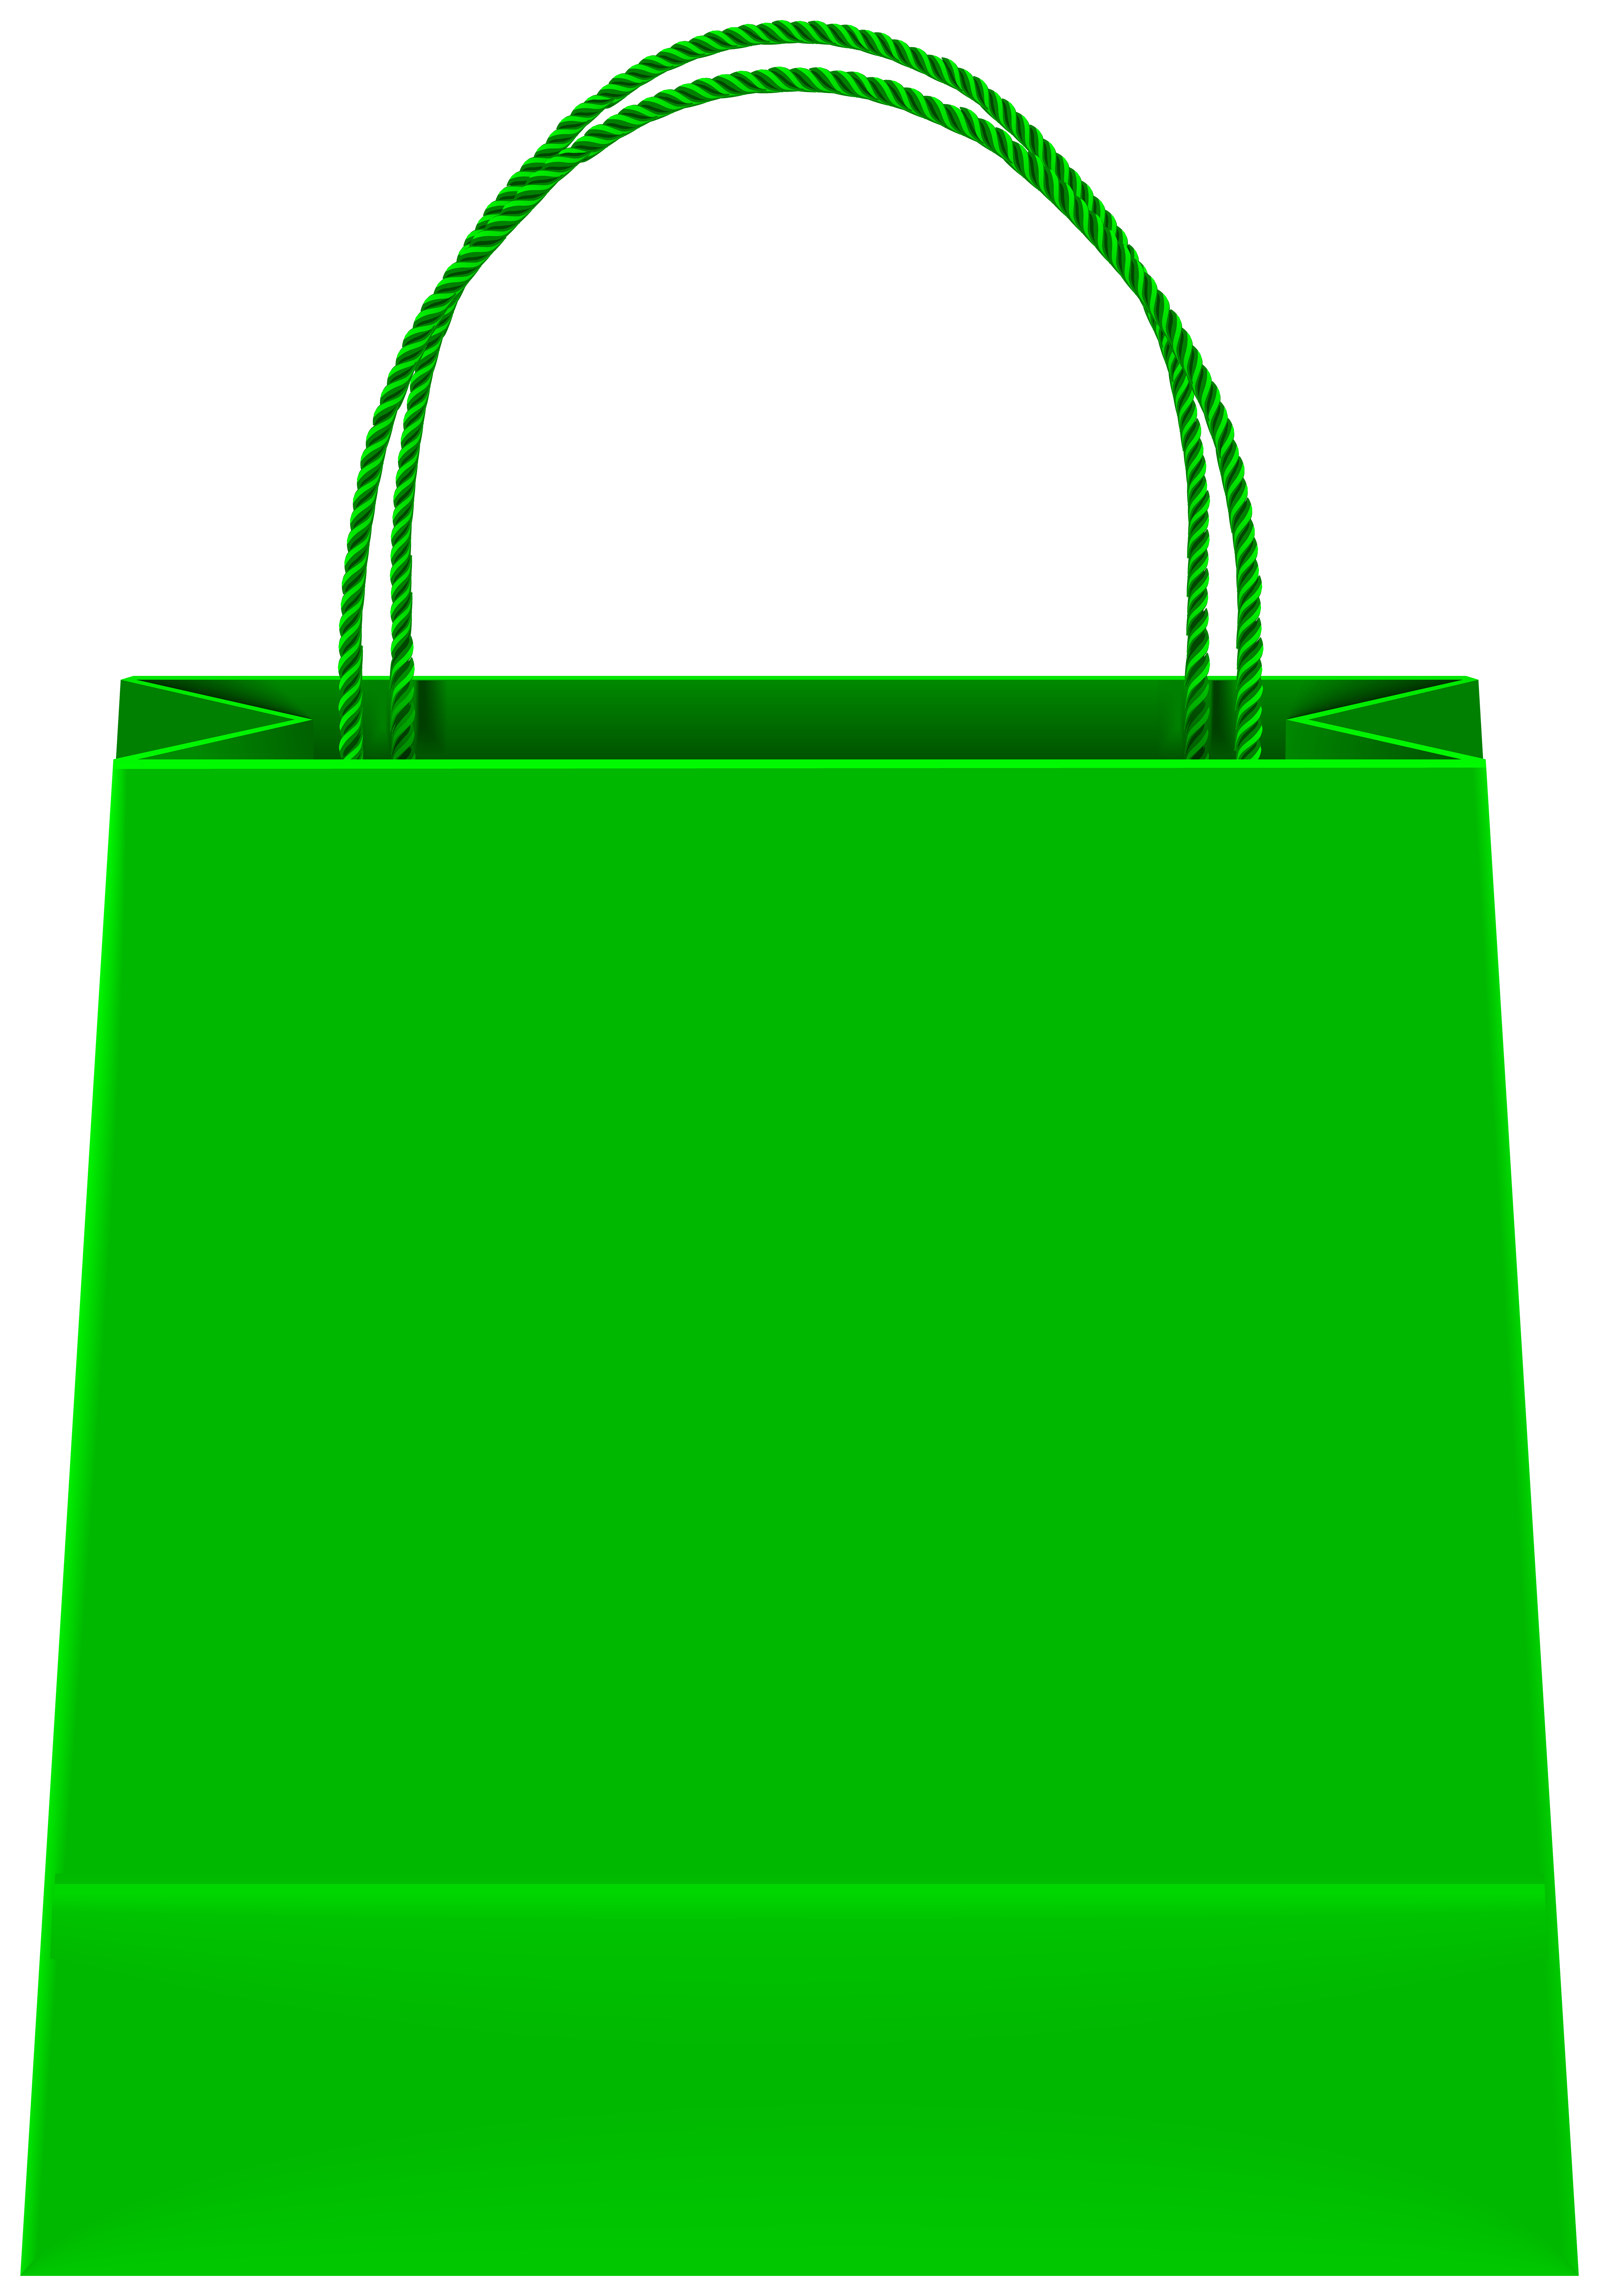 Download Green Shopping Bag Clip Art HQ PNG Image